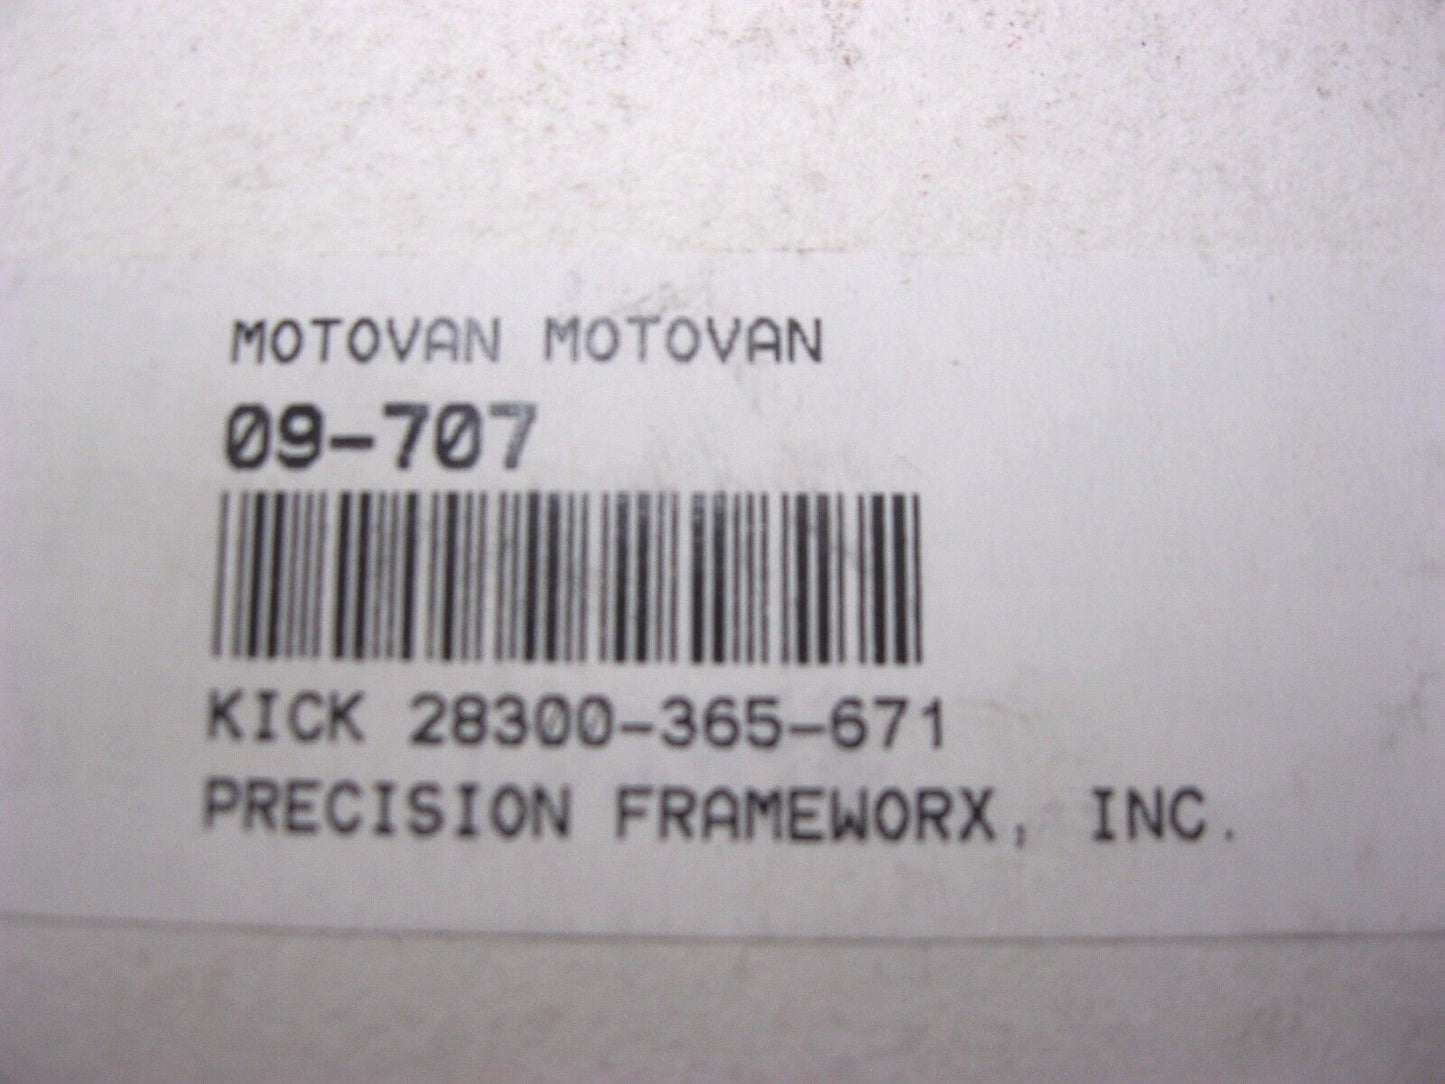 MOTOVAN   KICK  START  PEDAL OFFWHITE  RUBBER  09-707